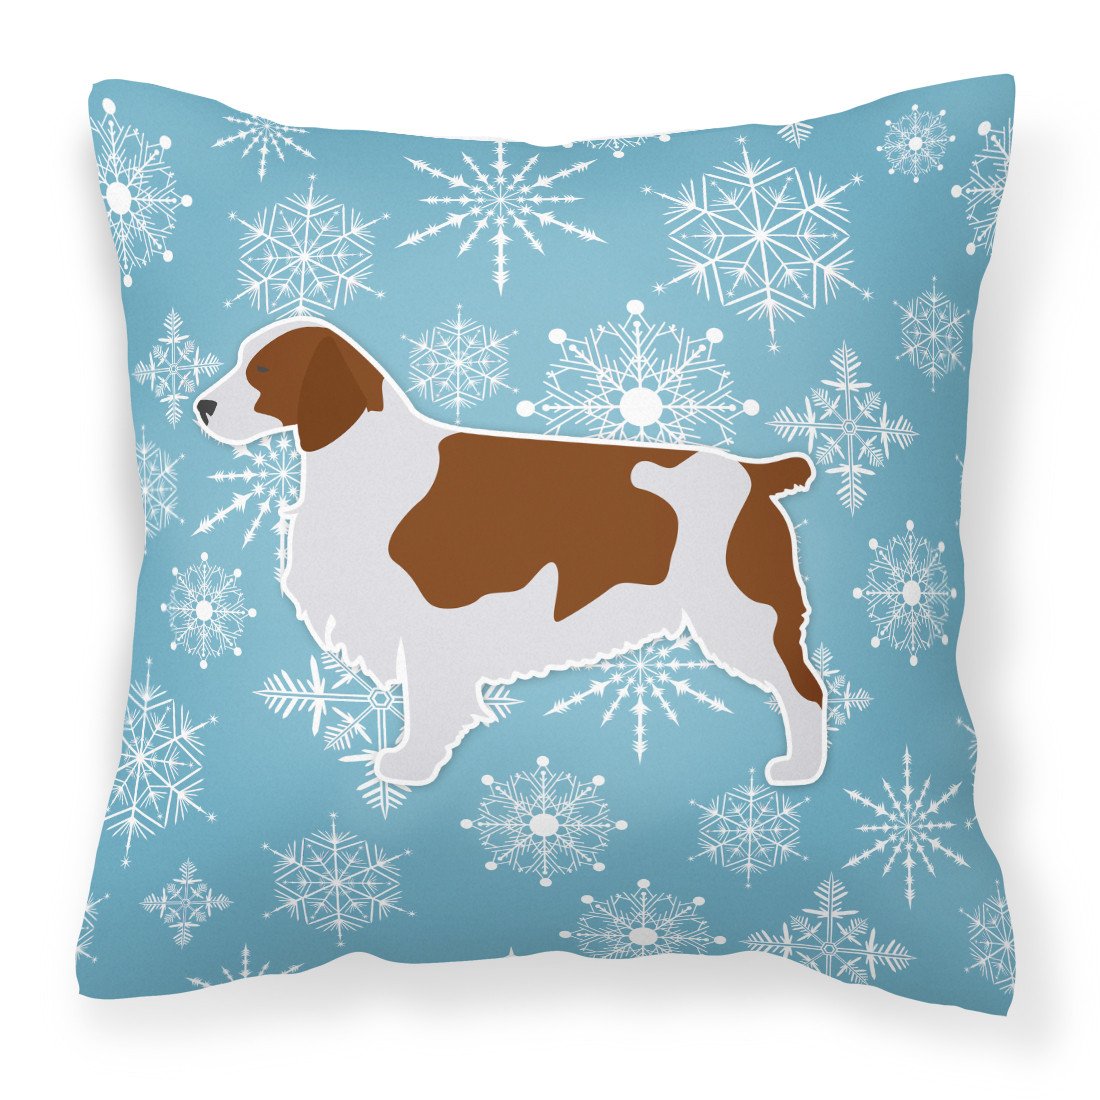 Winter Snowflake Welsh Springer Spaniel Fabric Decorative Pillow BB3500PW1818 by Caroline's Treasures